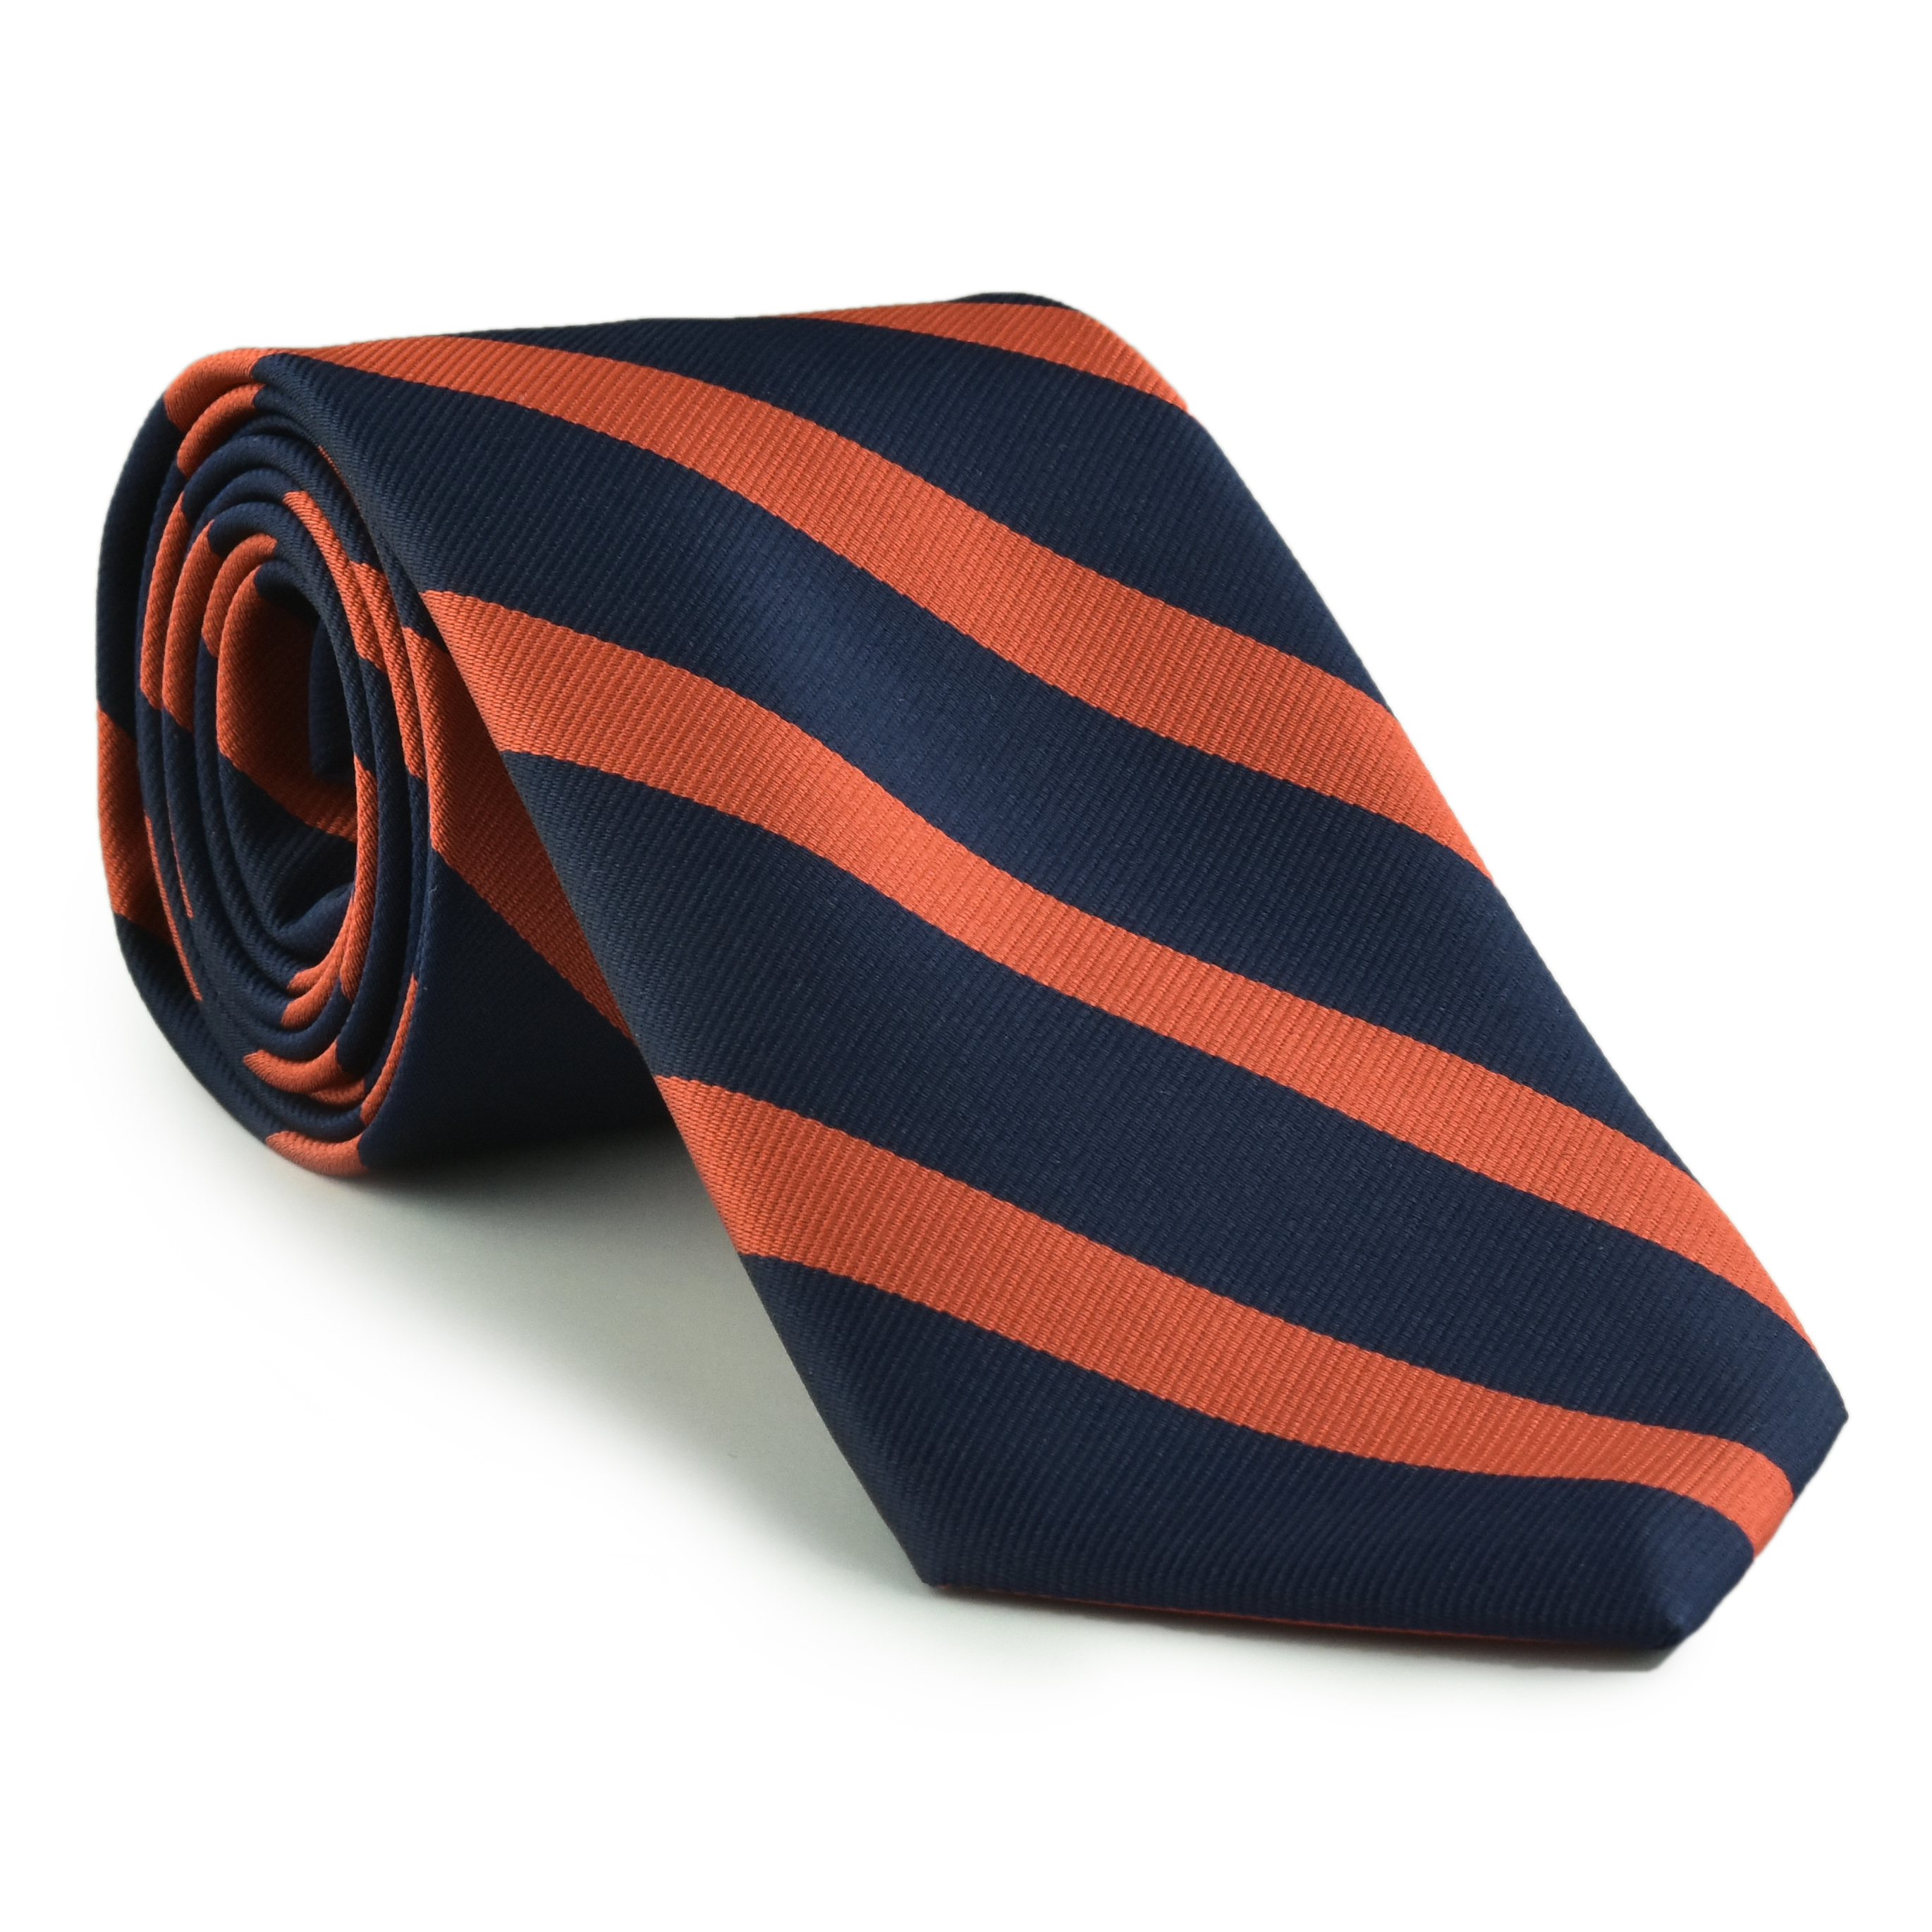 Dark Navy and Red Striped Tie 